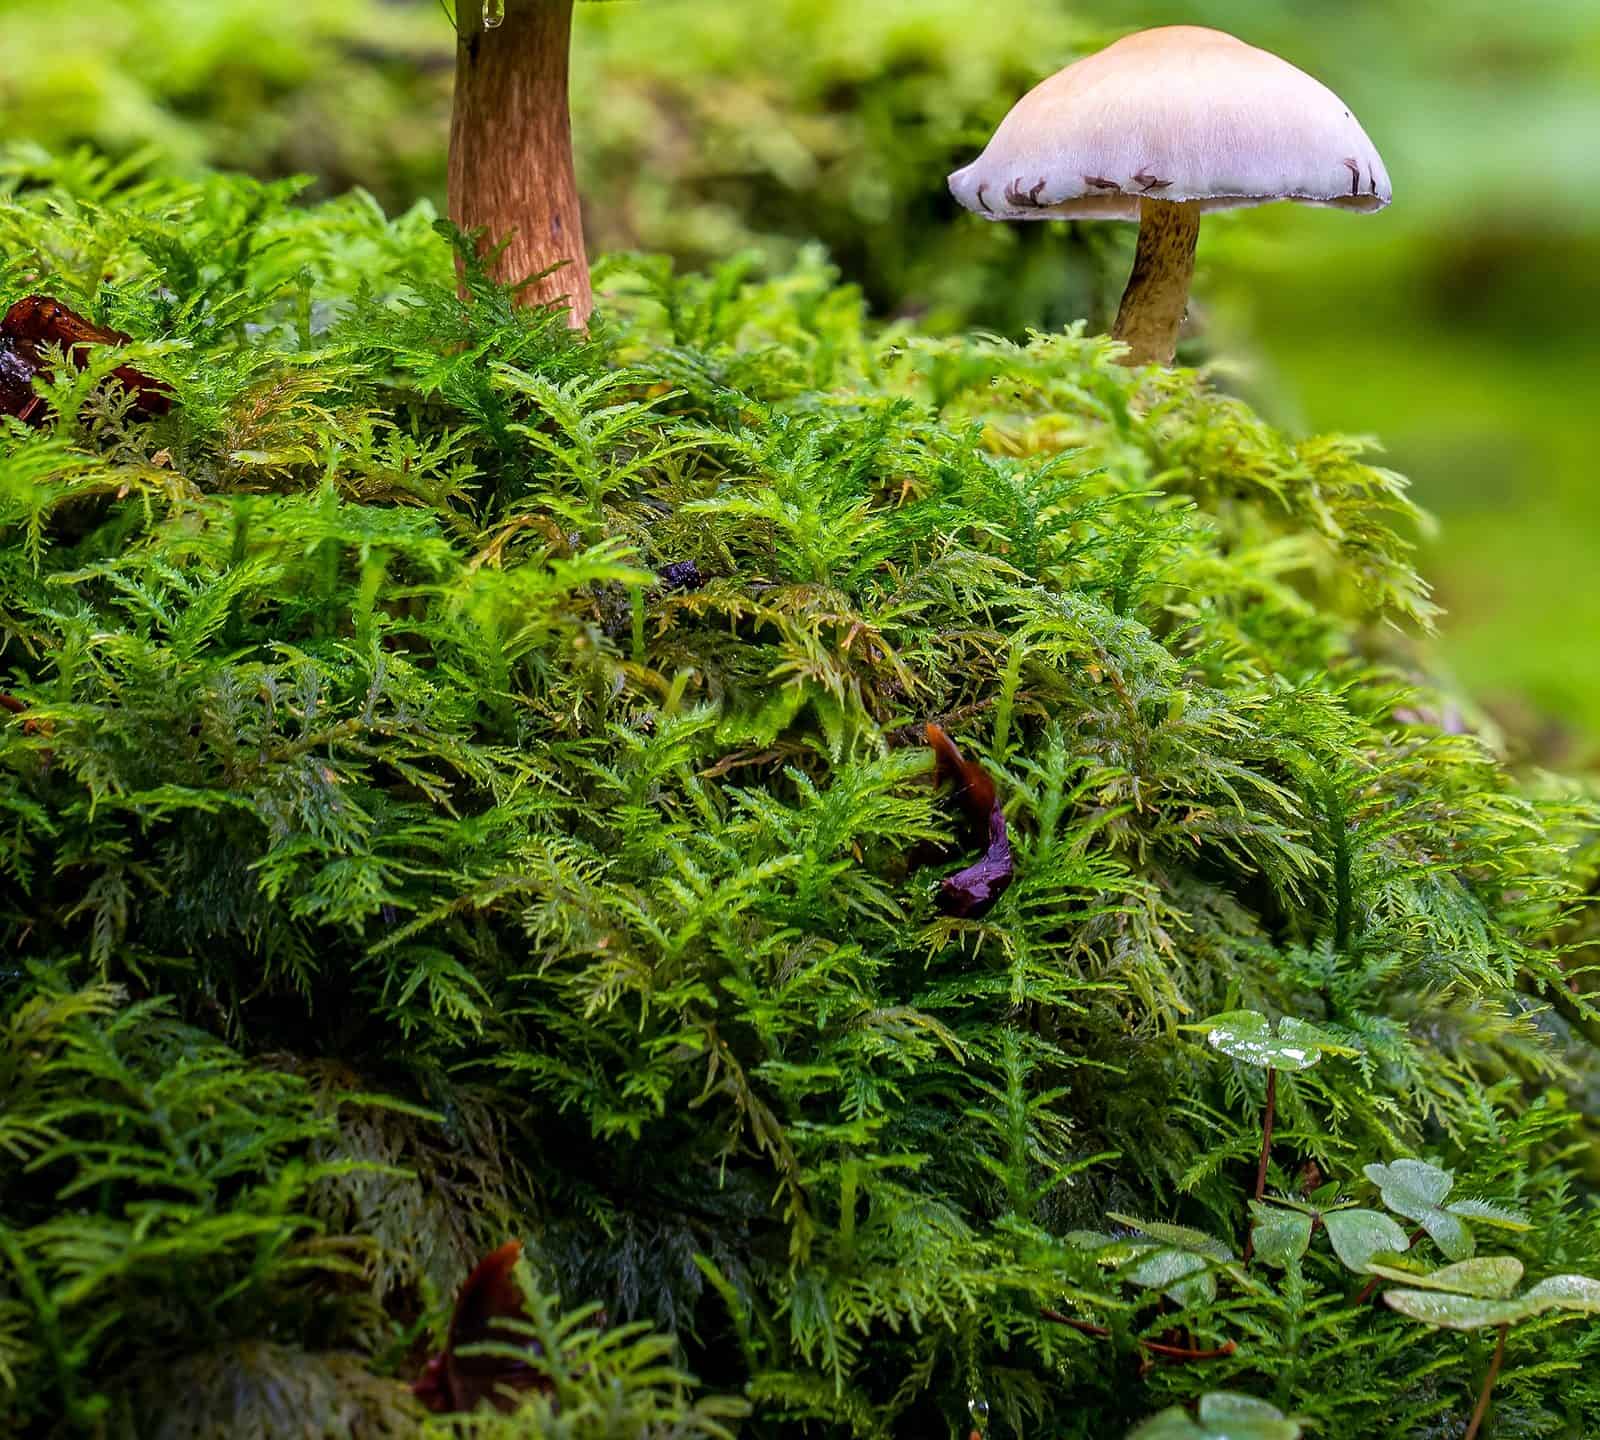 Wild mushrooms growing among moss